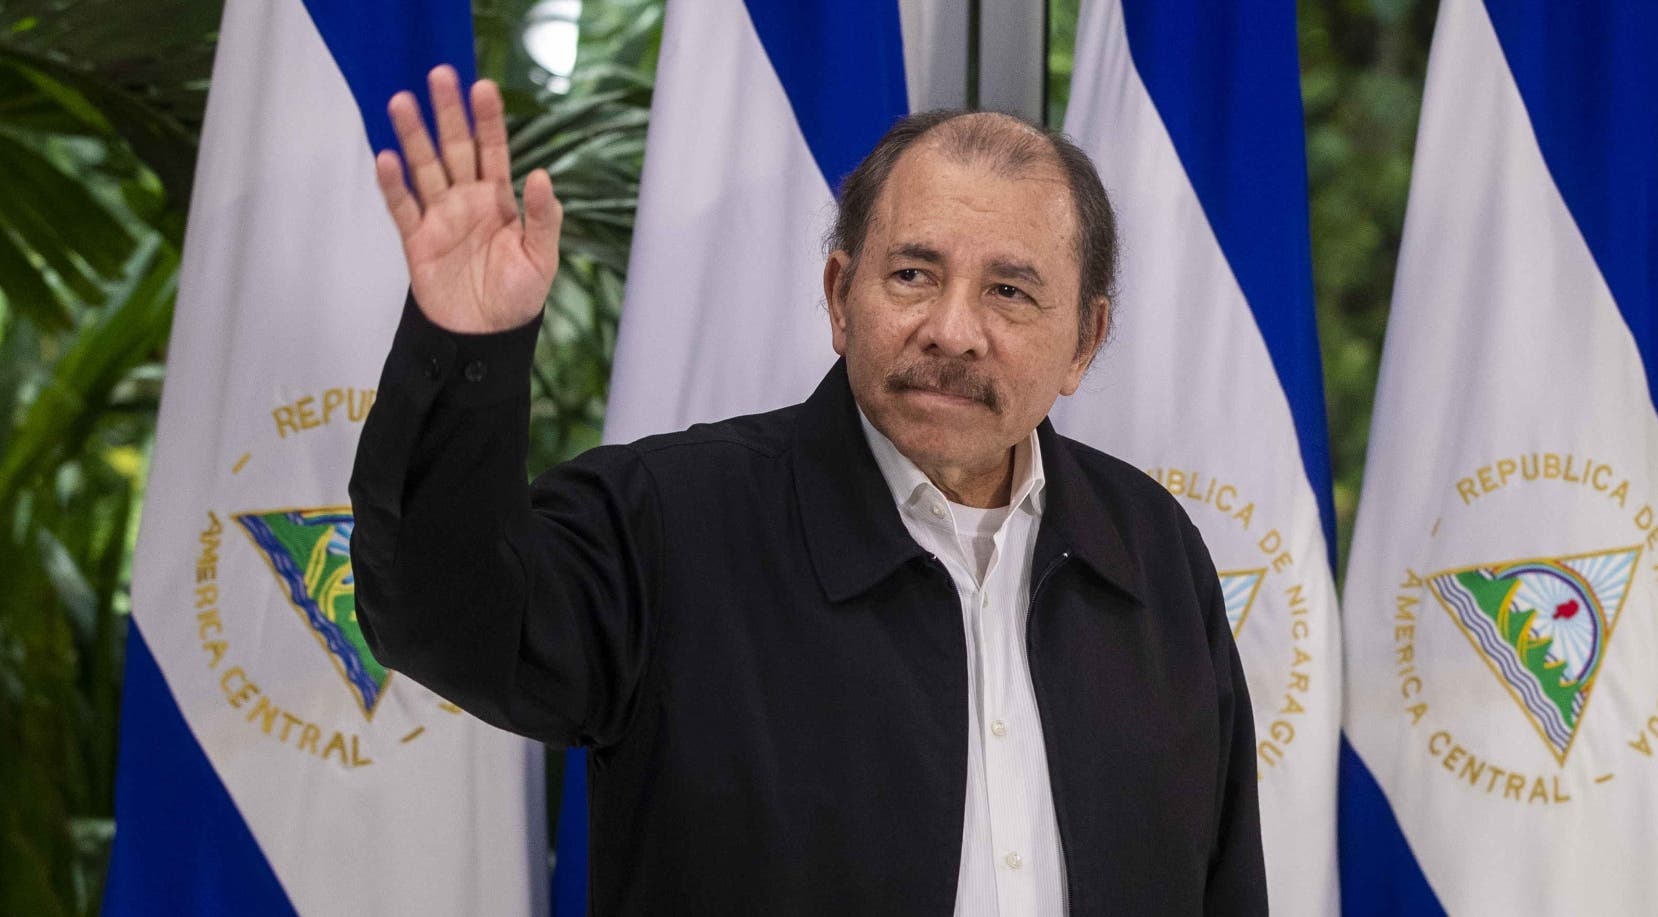 Daniel Ortega es reelegido a quinto mandato en Nicaragua